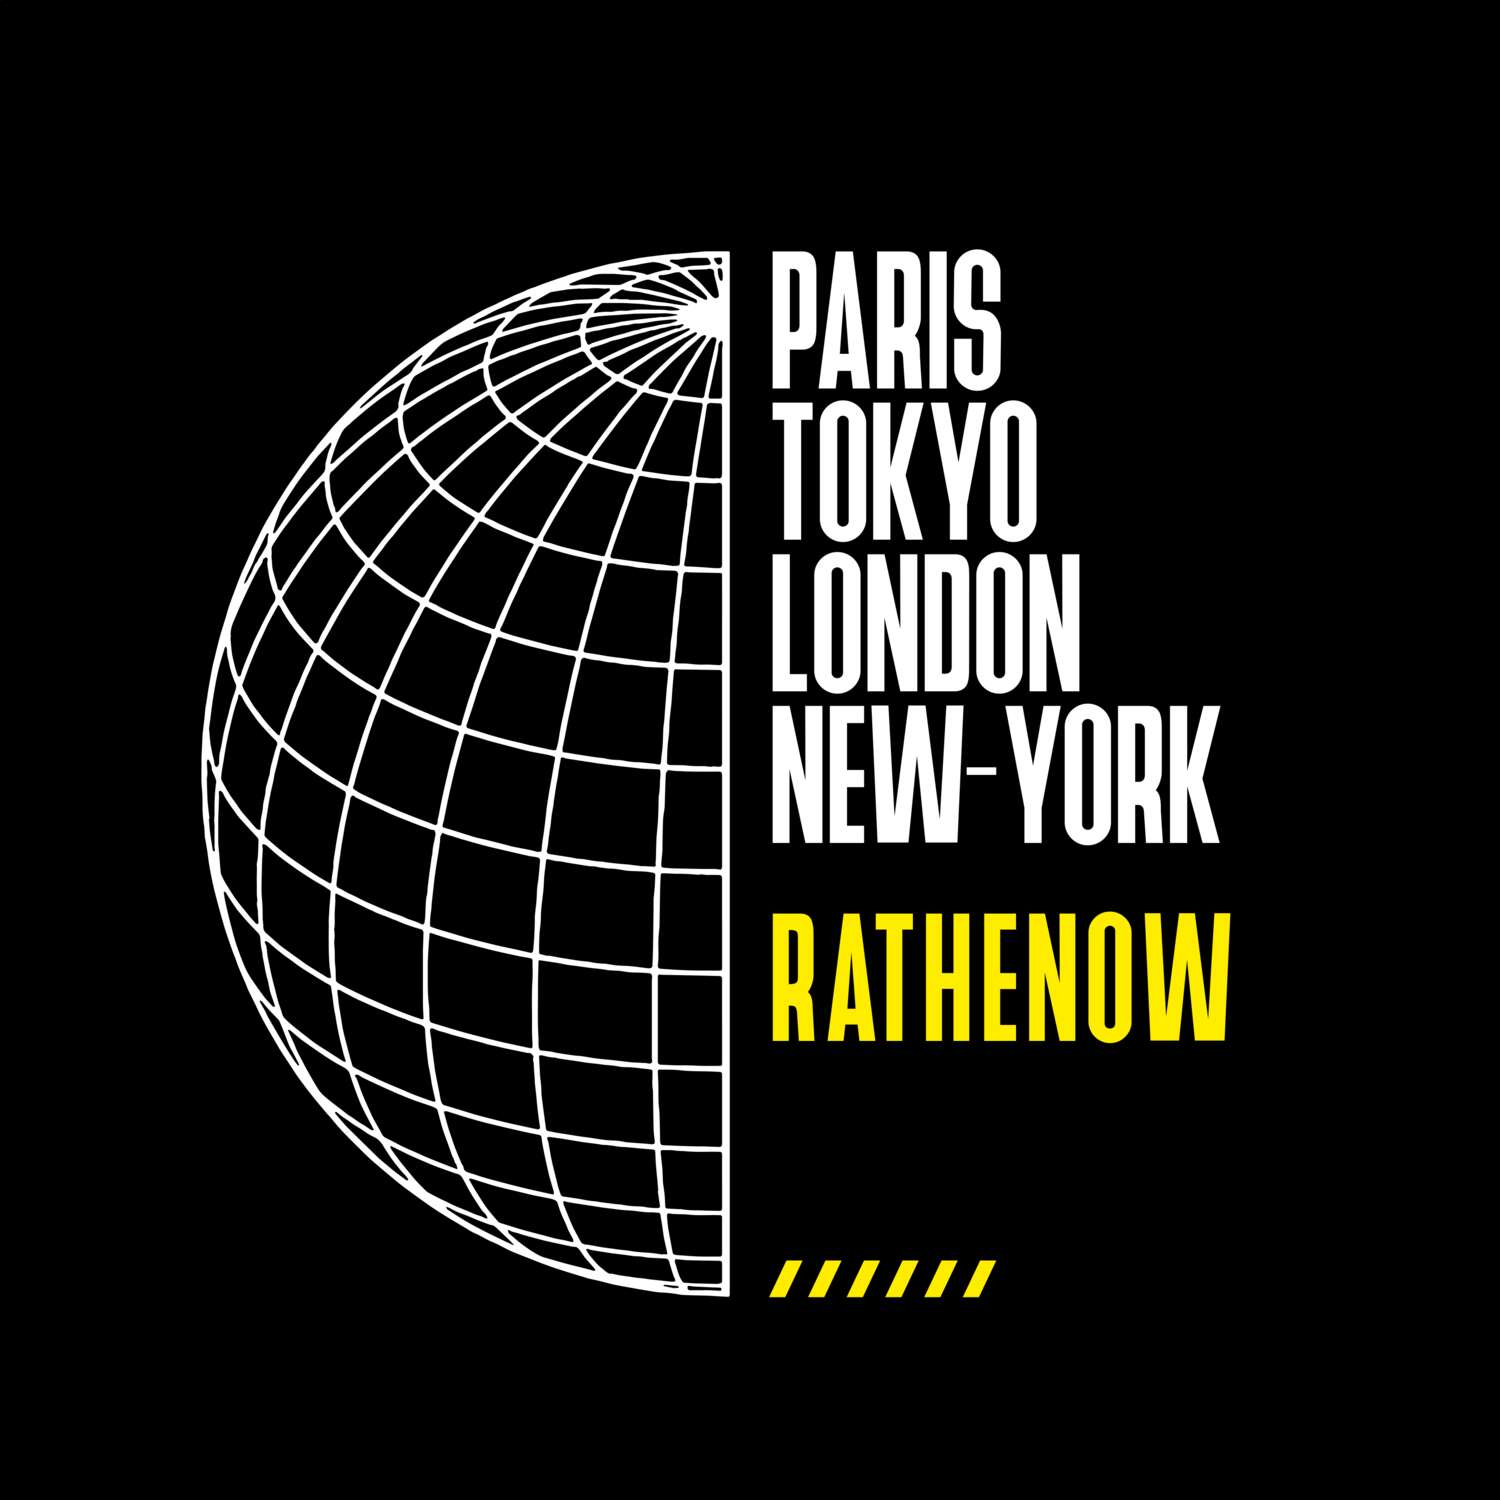 Rathenow T-Shirt »Paris Tokyo London«